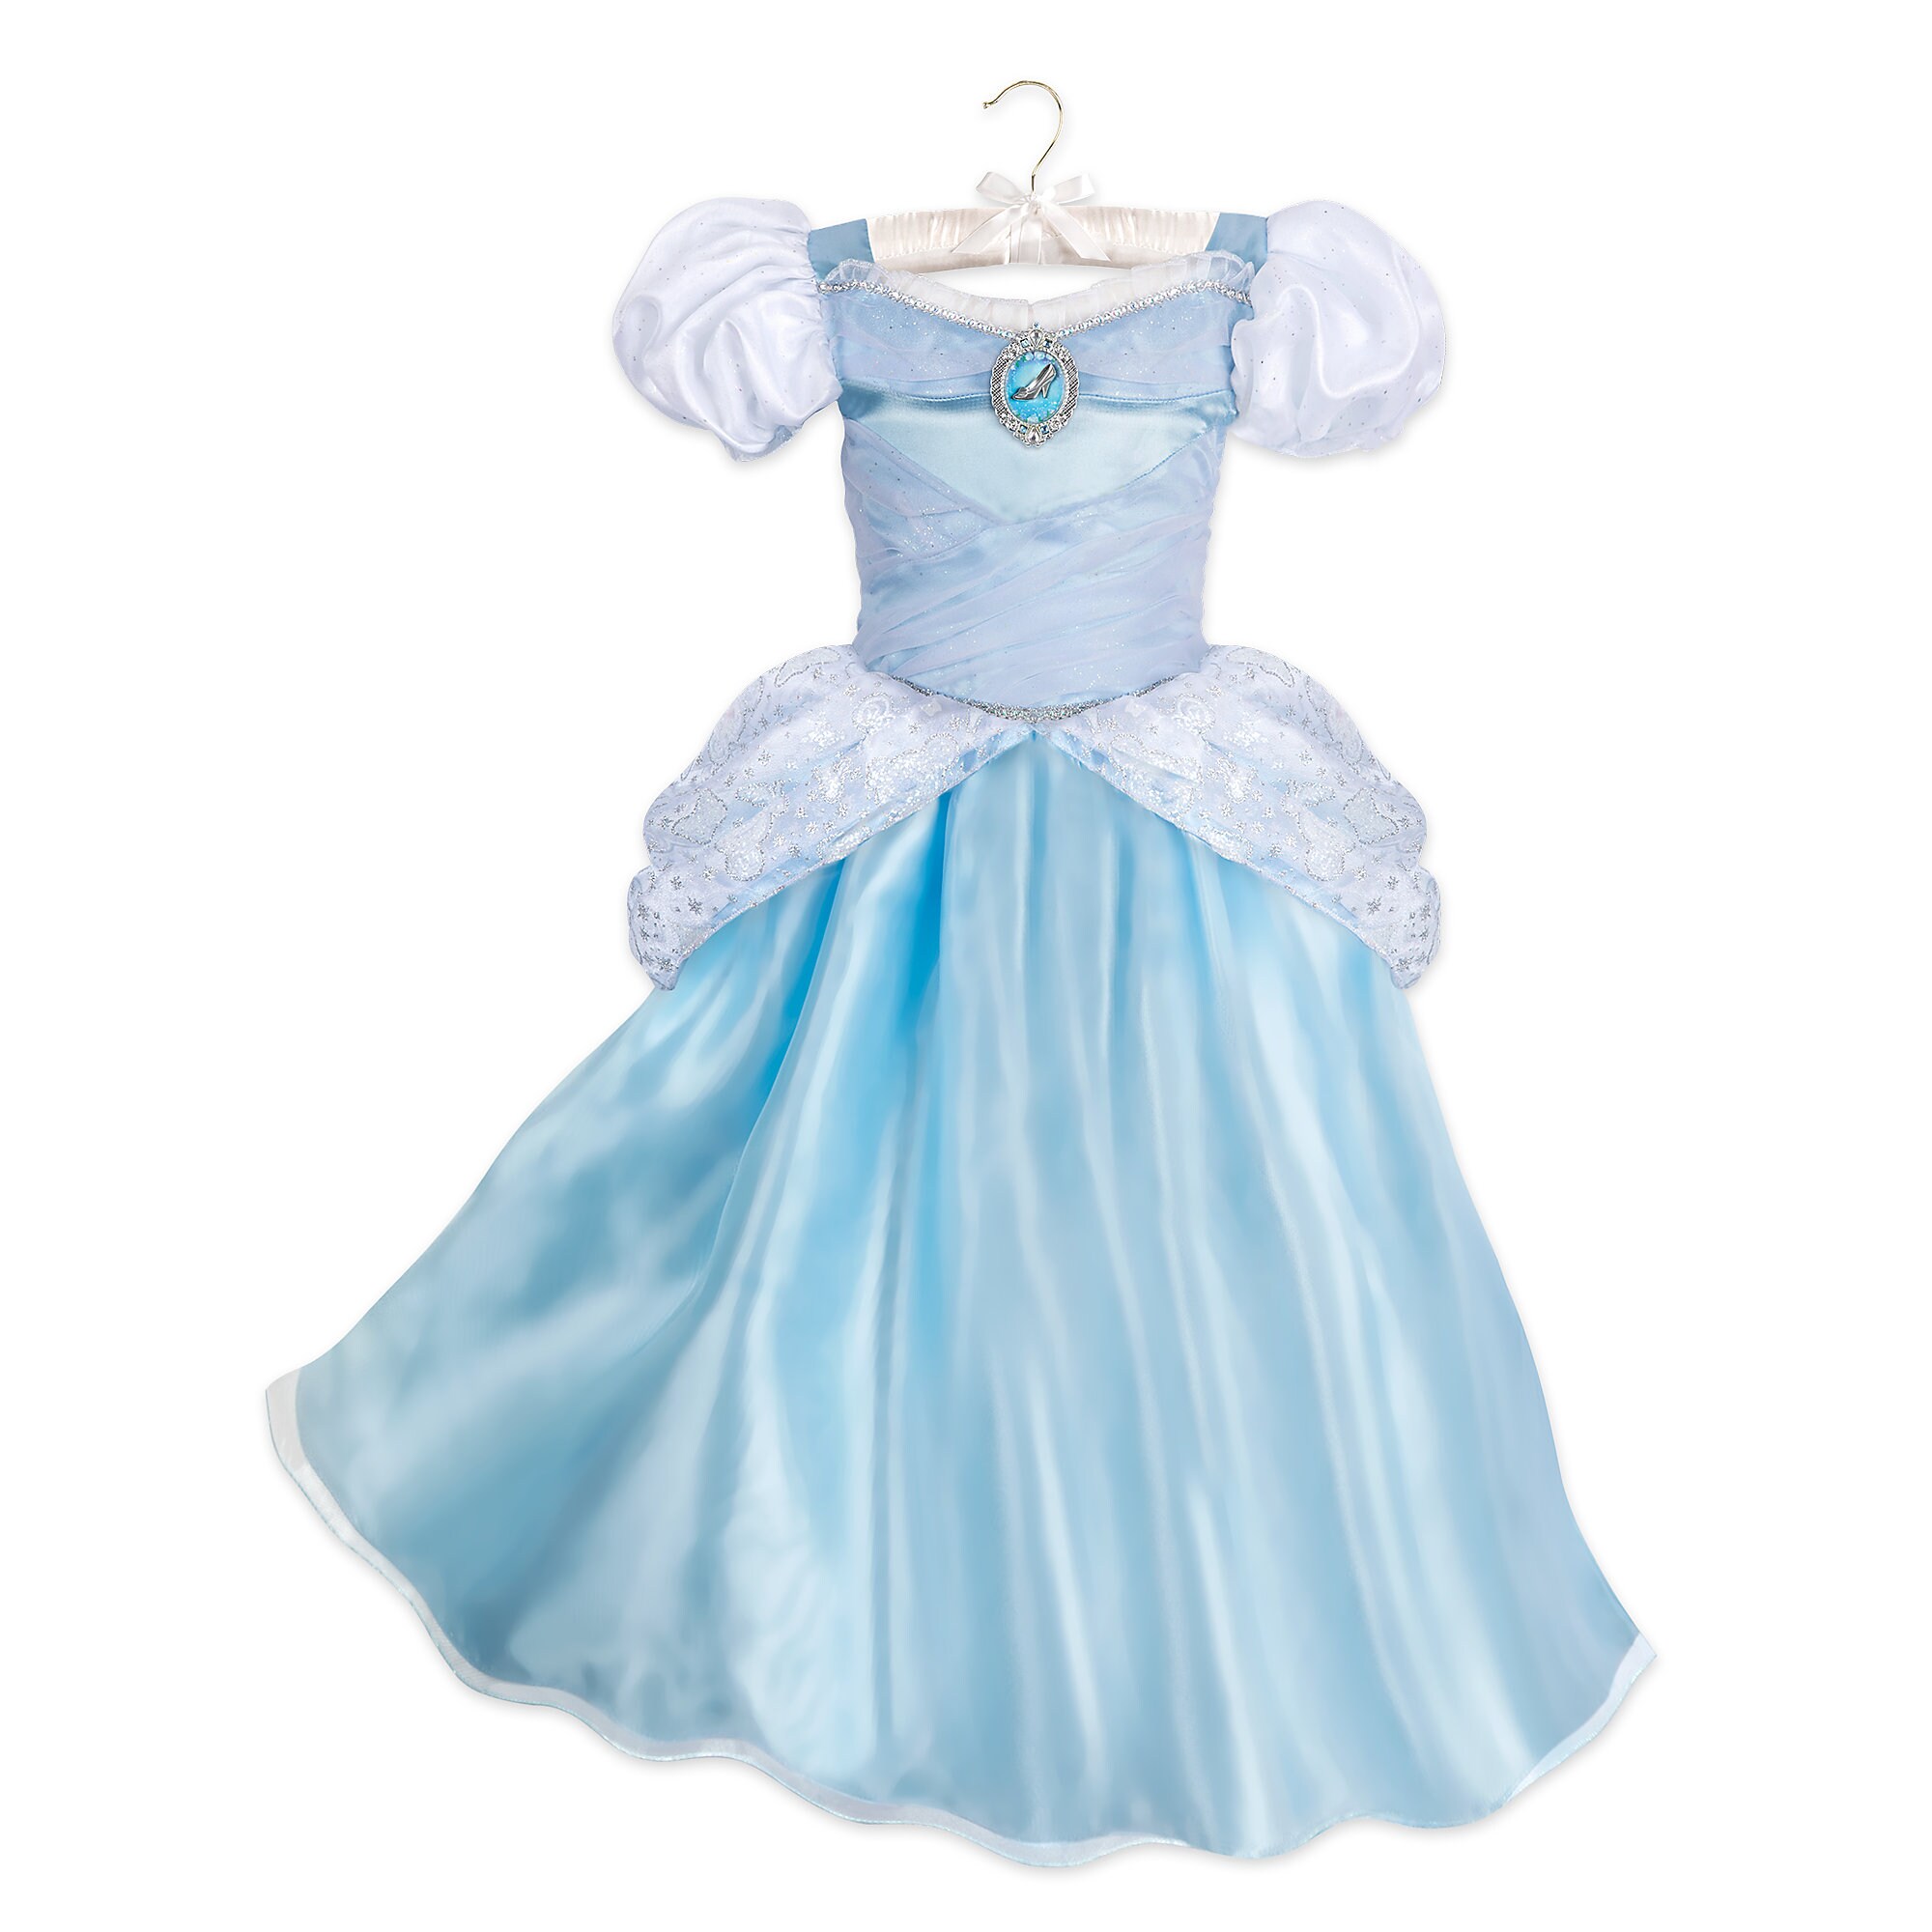 Cinderella Costume for Kids